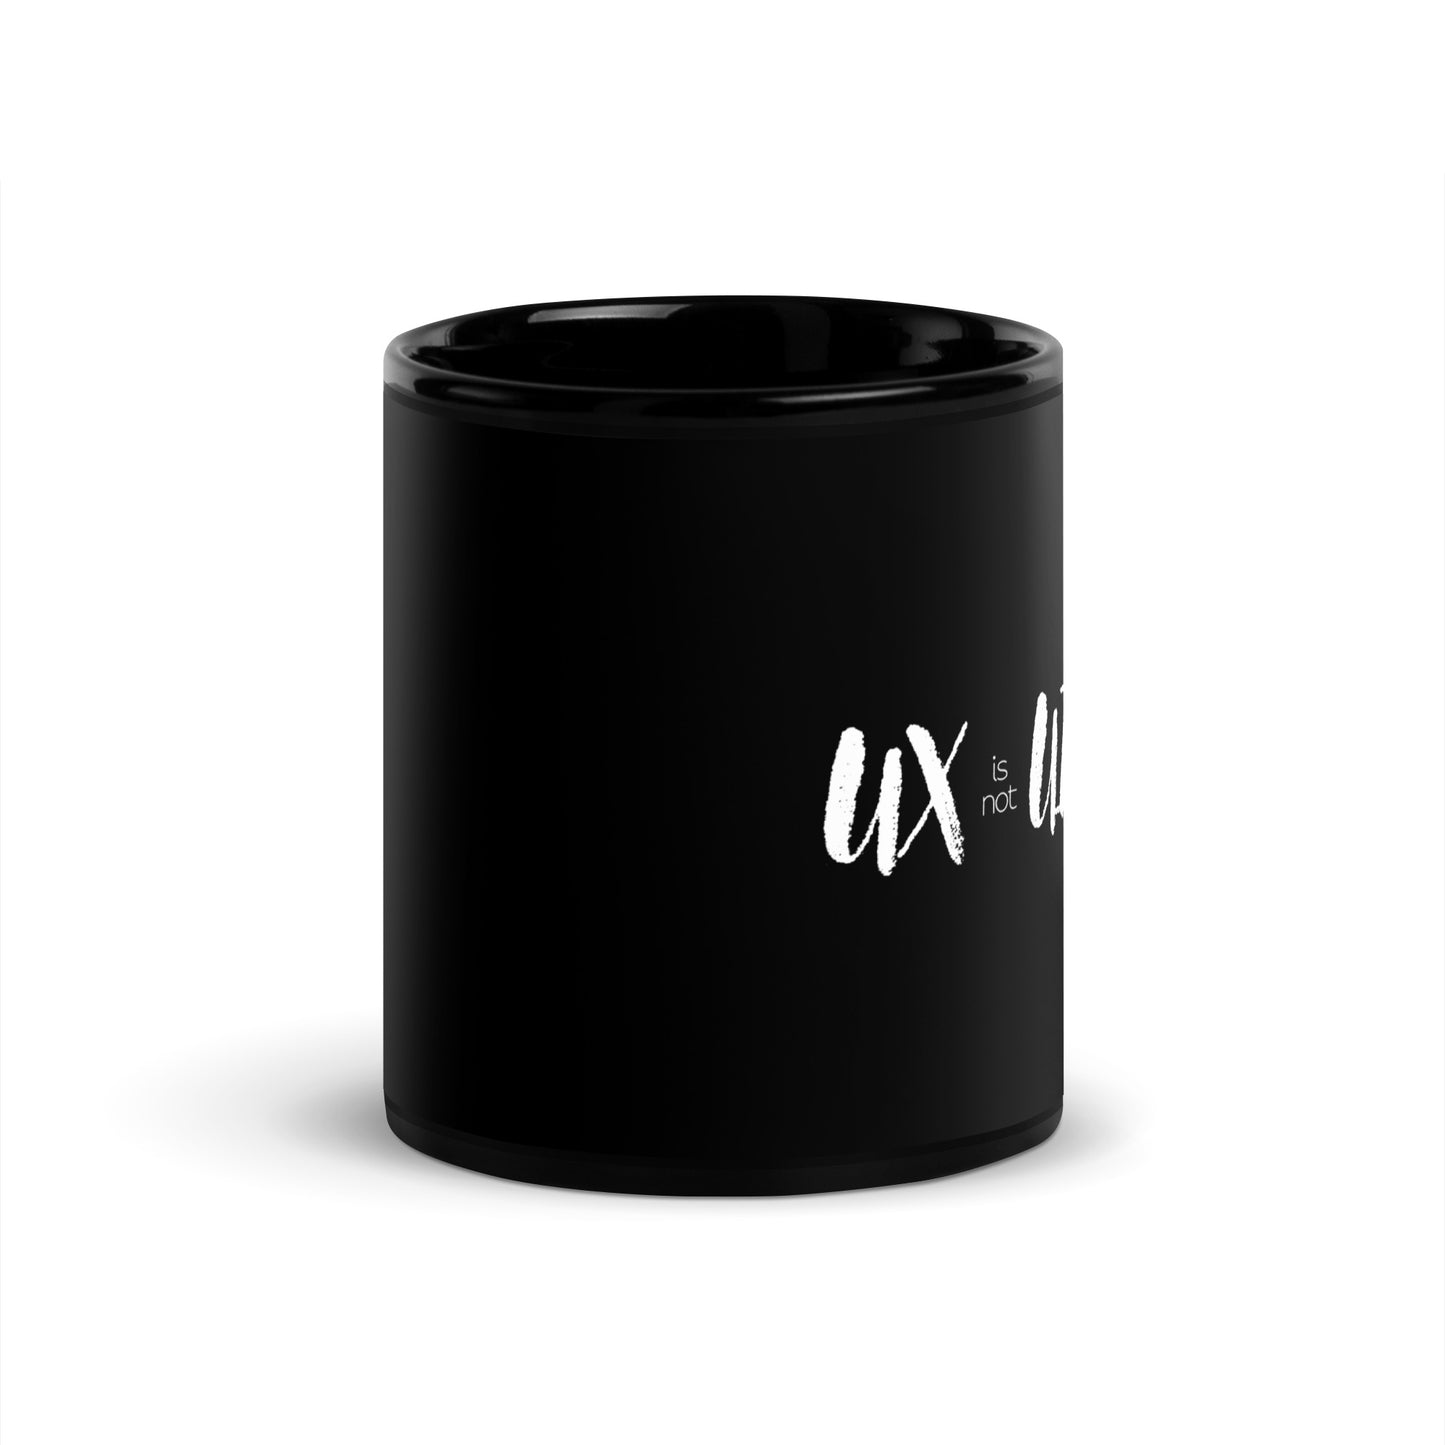 UX is not UI Coffee Mug #1